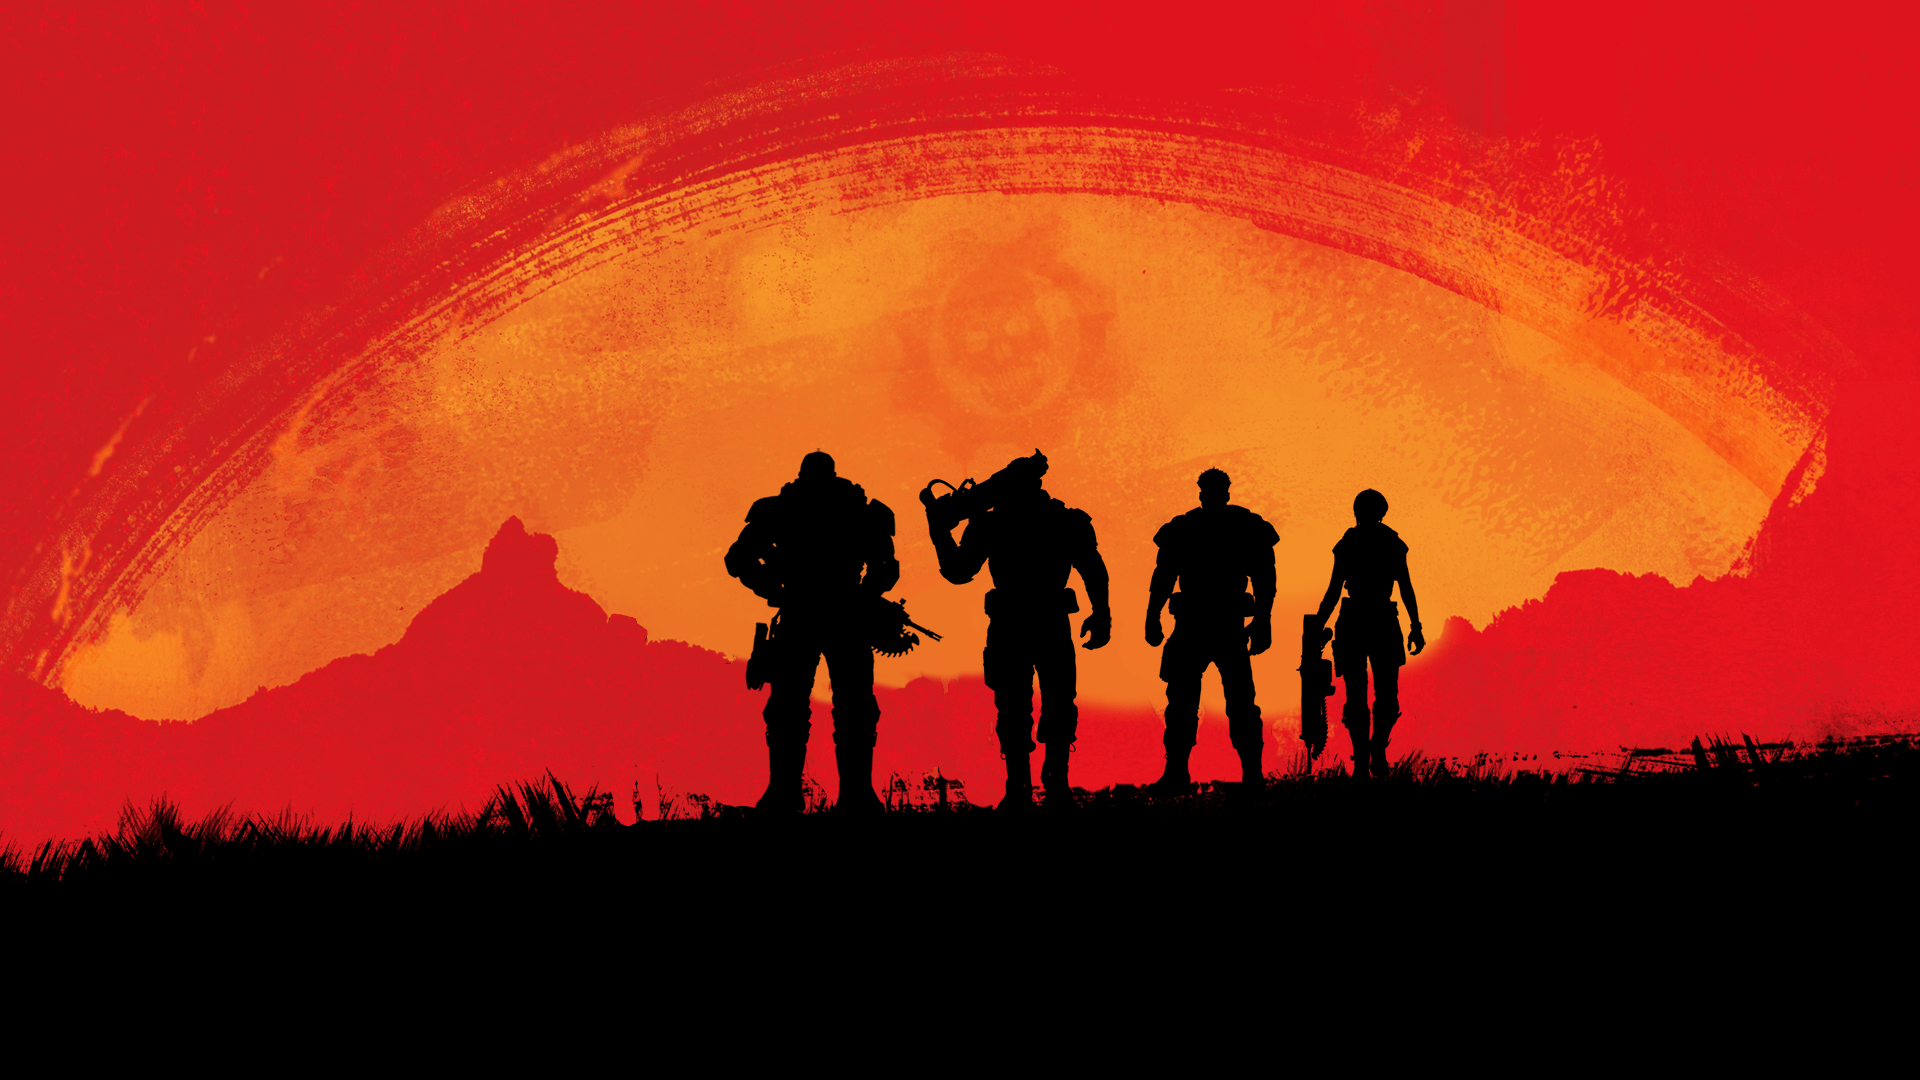 Red Dead Redemption 2 Desktop Background - 1920x1080 Wallpaper 